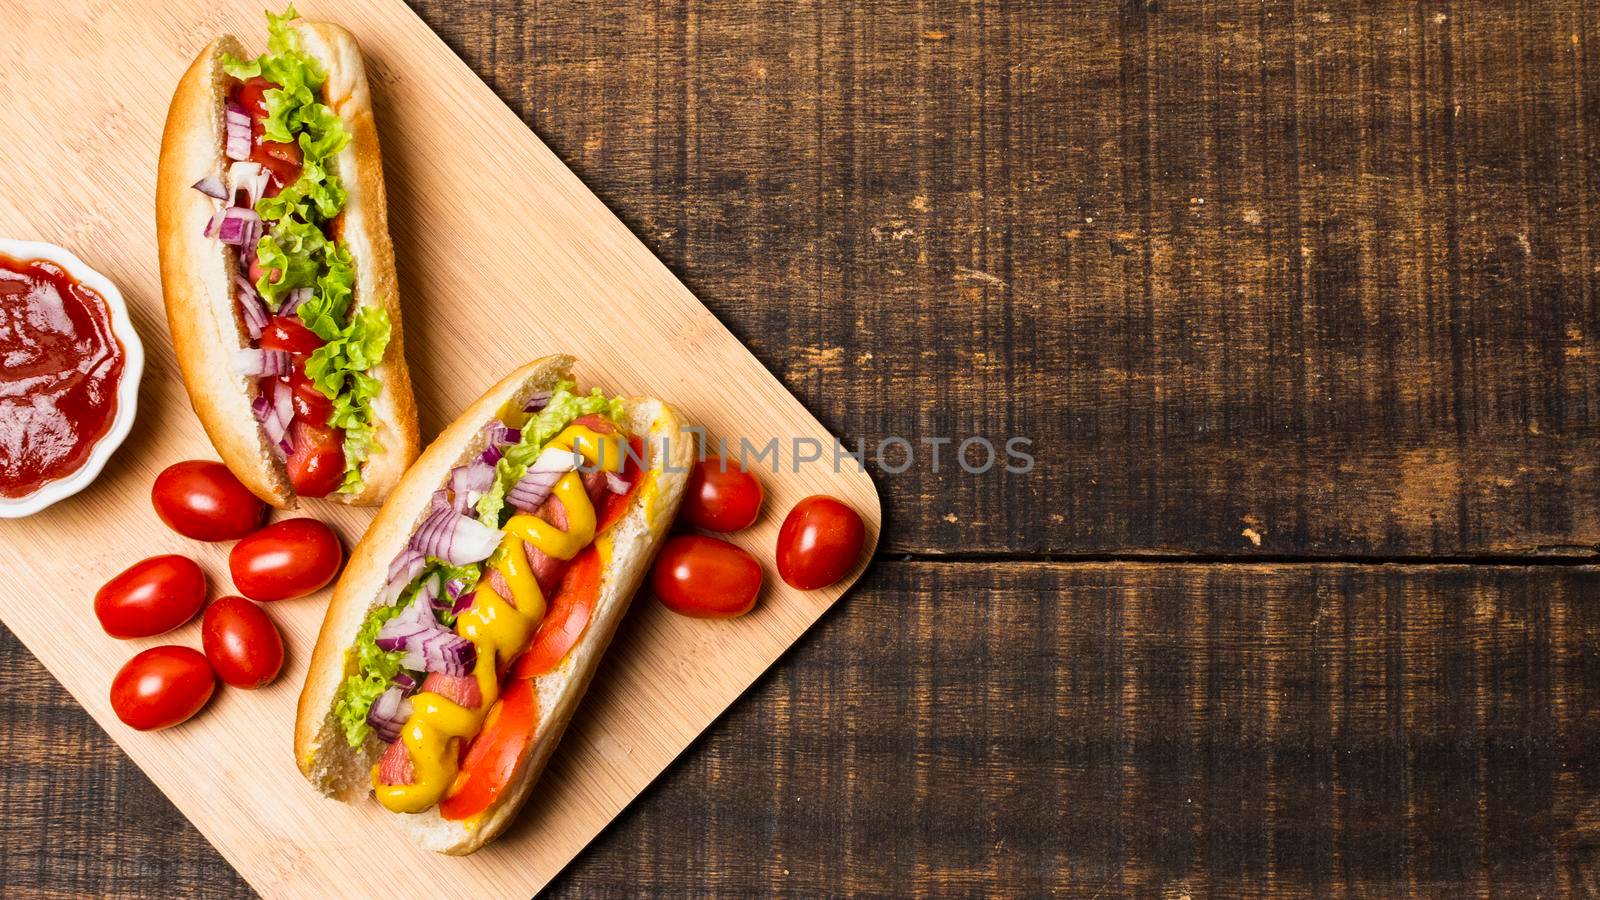 hotdogs cutboard with copy space by Zahard